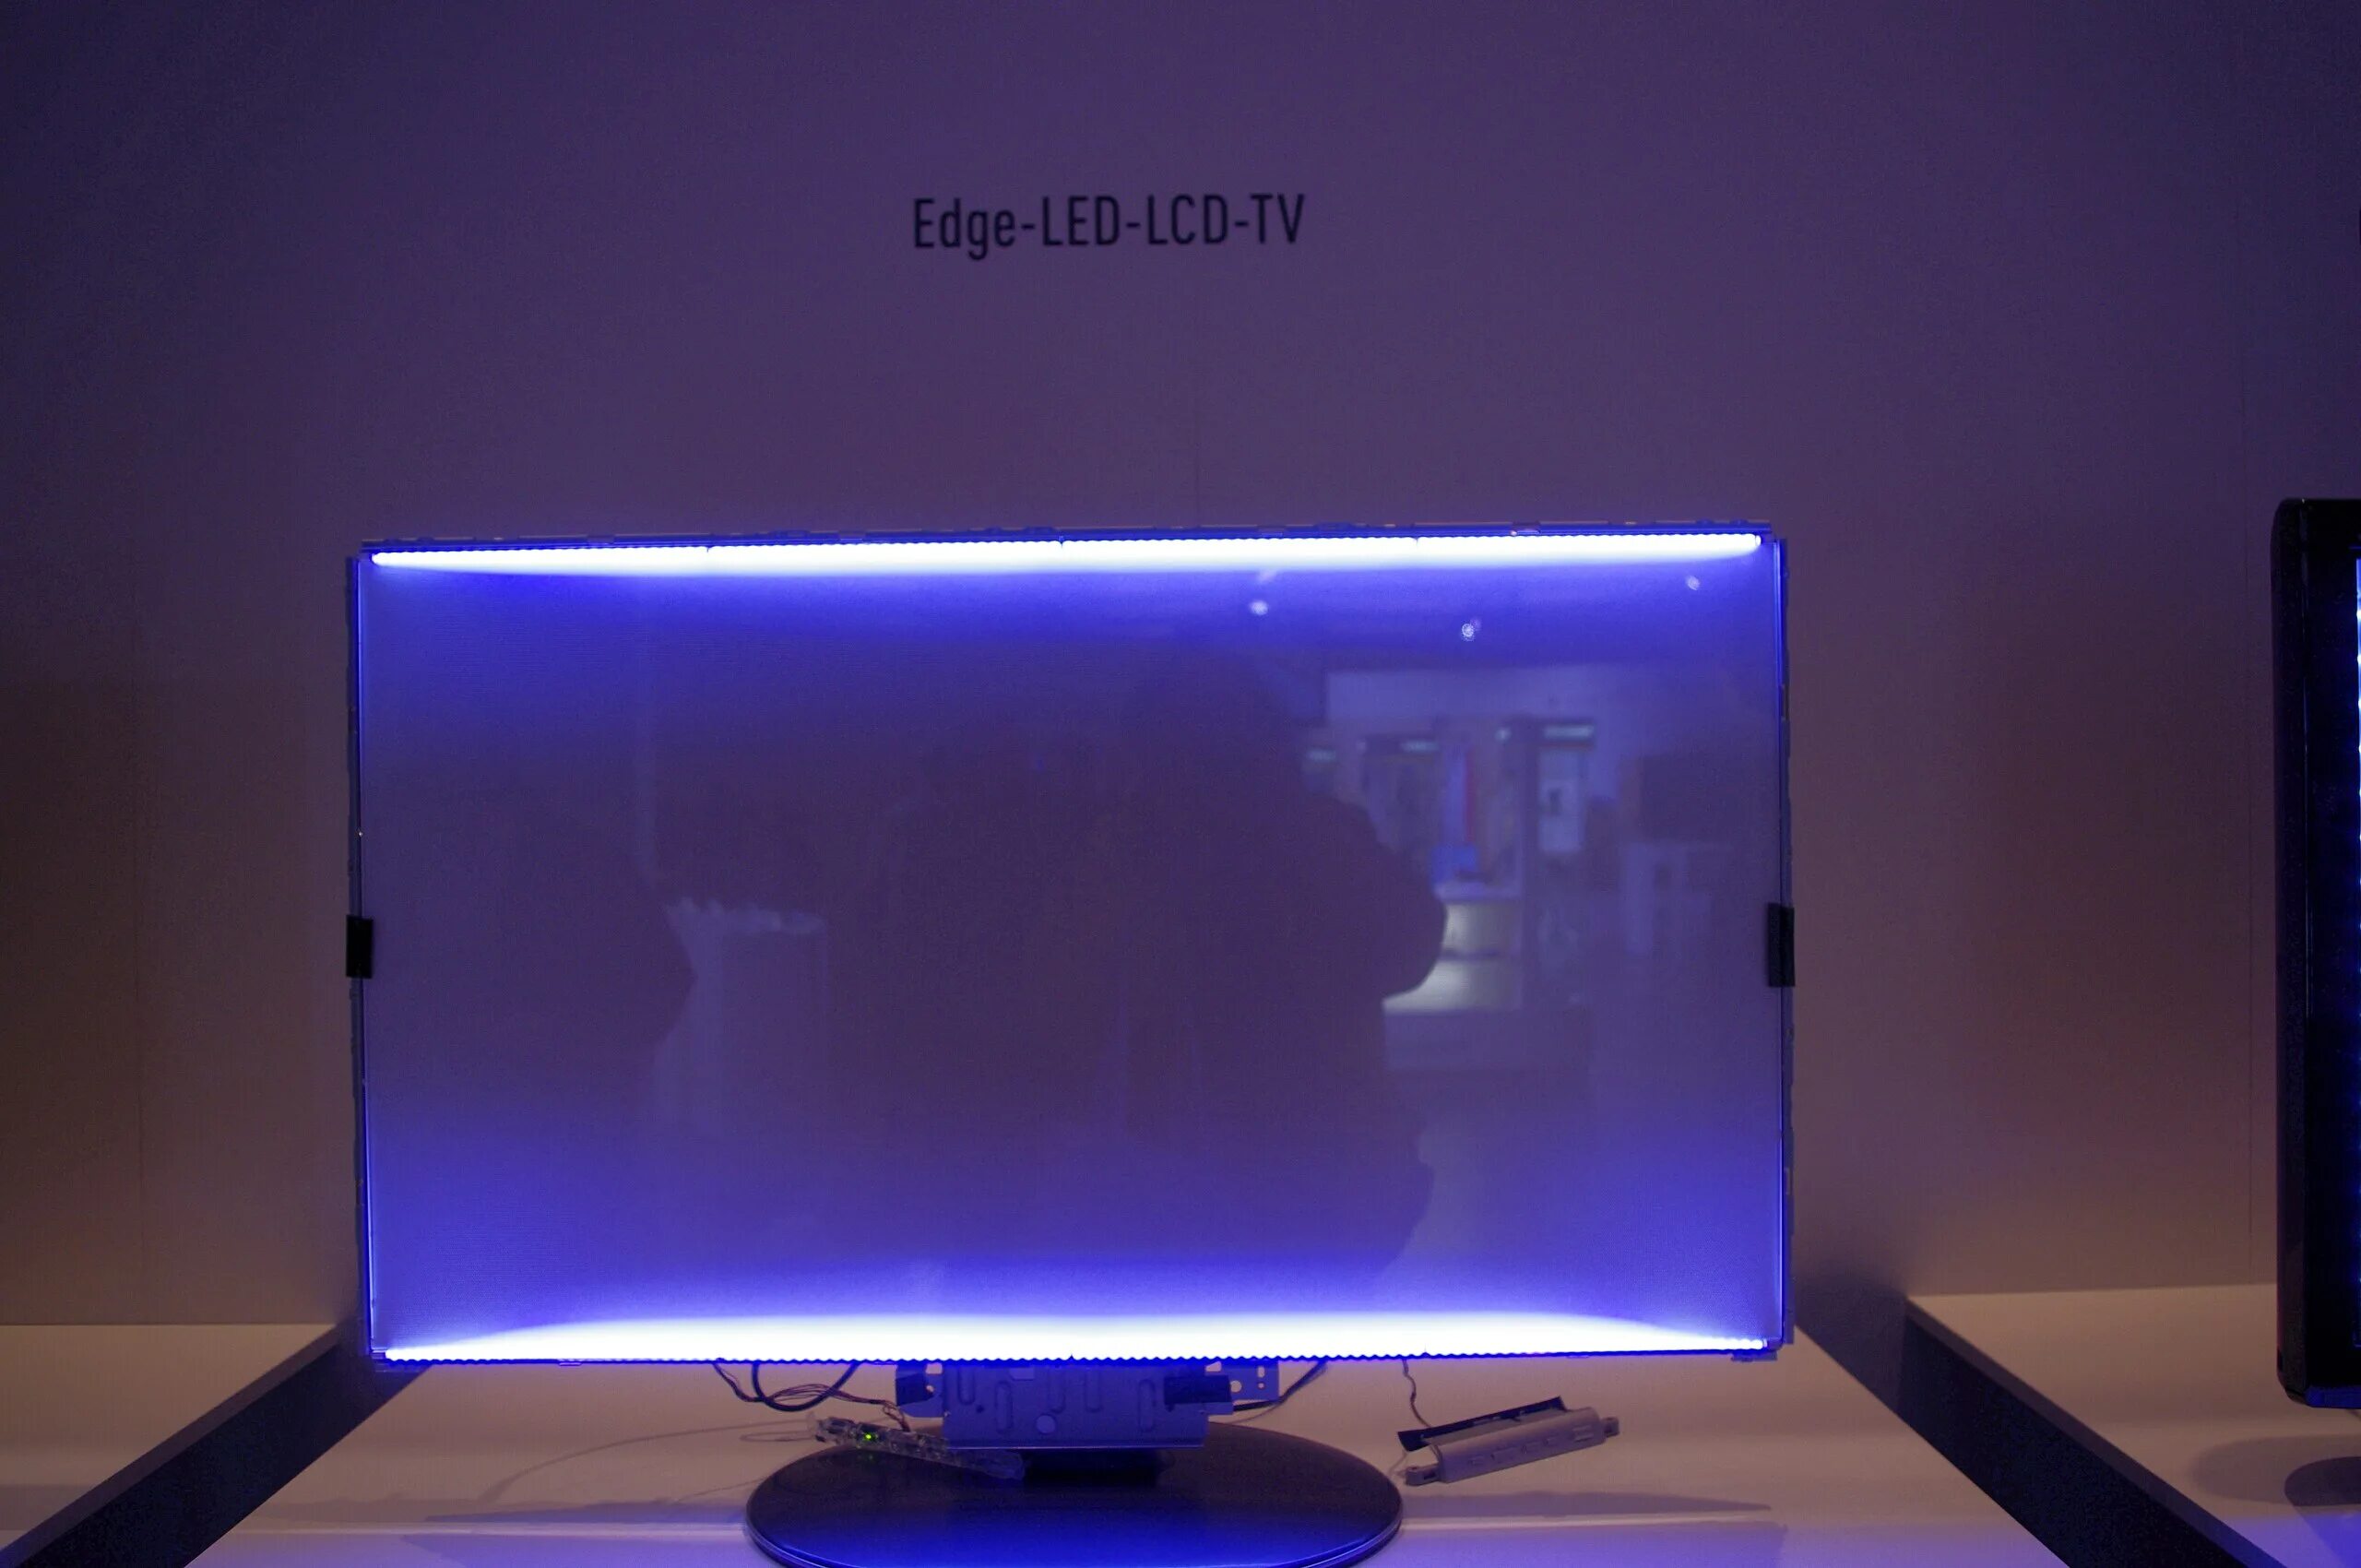 Светодиоды подсветки телевизоров лед. Edge led подсветка Samsung. Подсветка Edge led что это такое в телевизоре. Тип светодиодной подсветки: Edge led. Подсветка direct led что это такое в телевизоре.